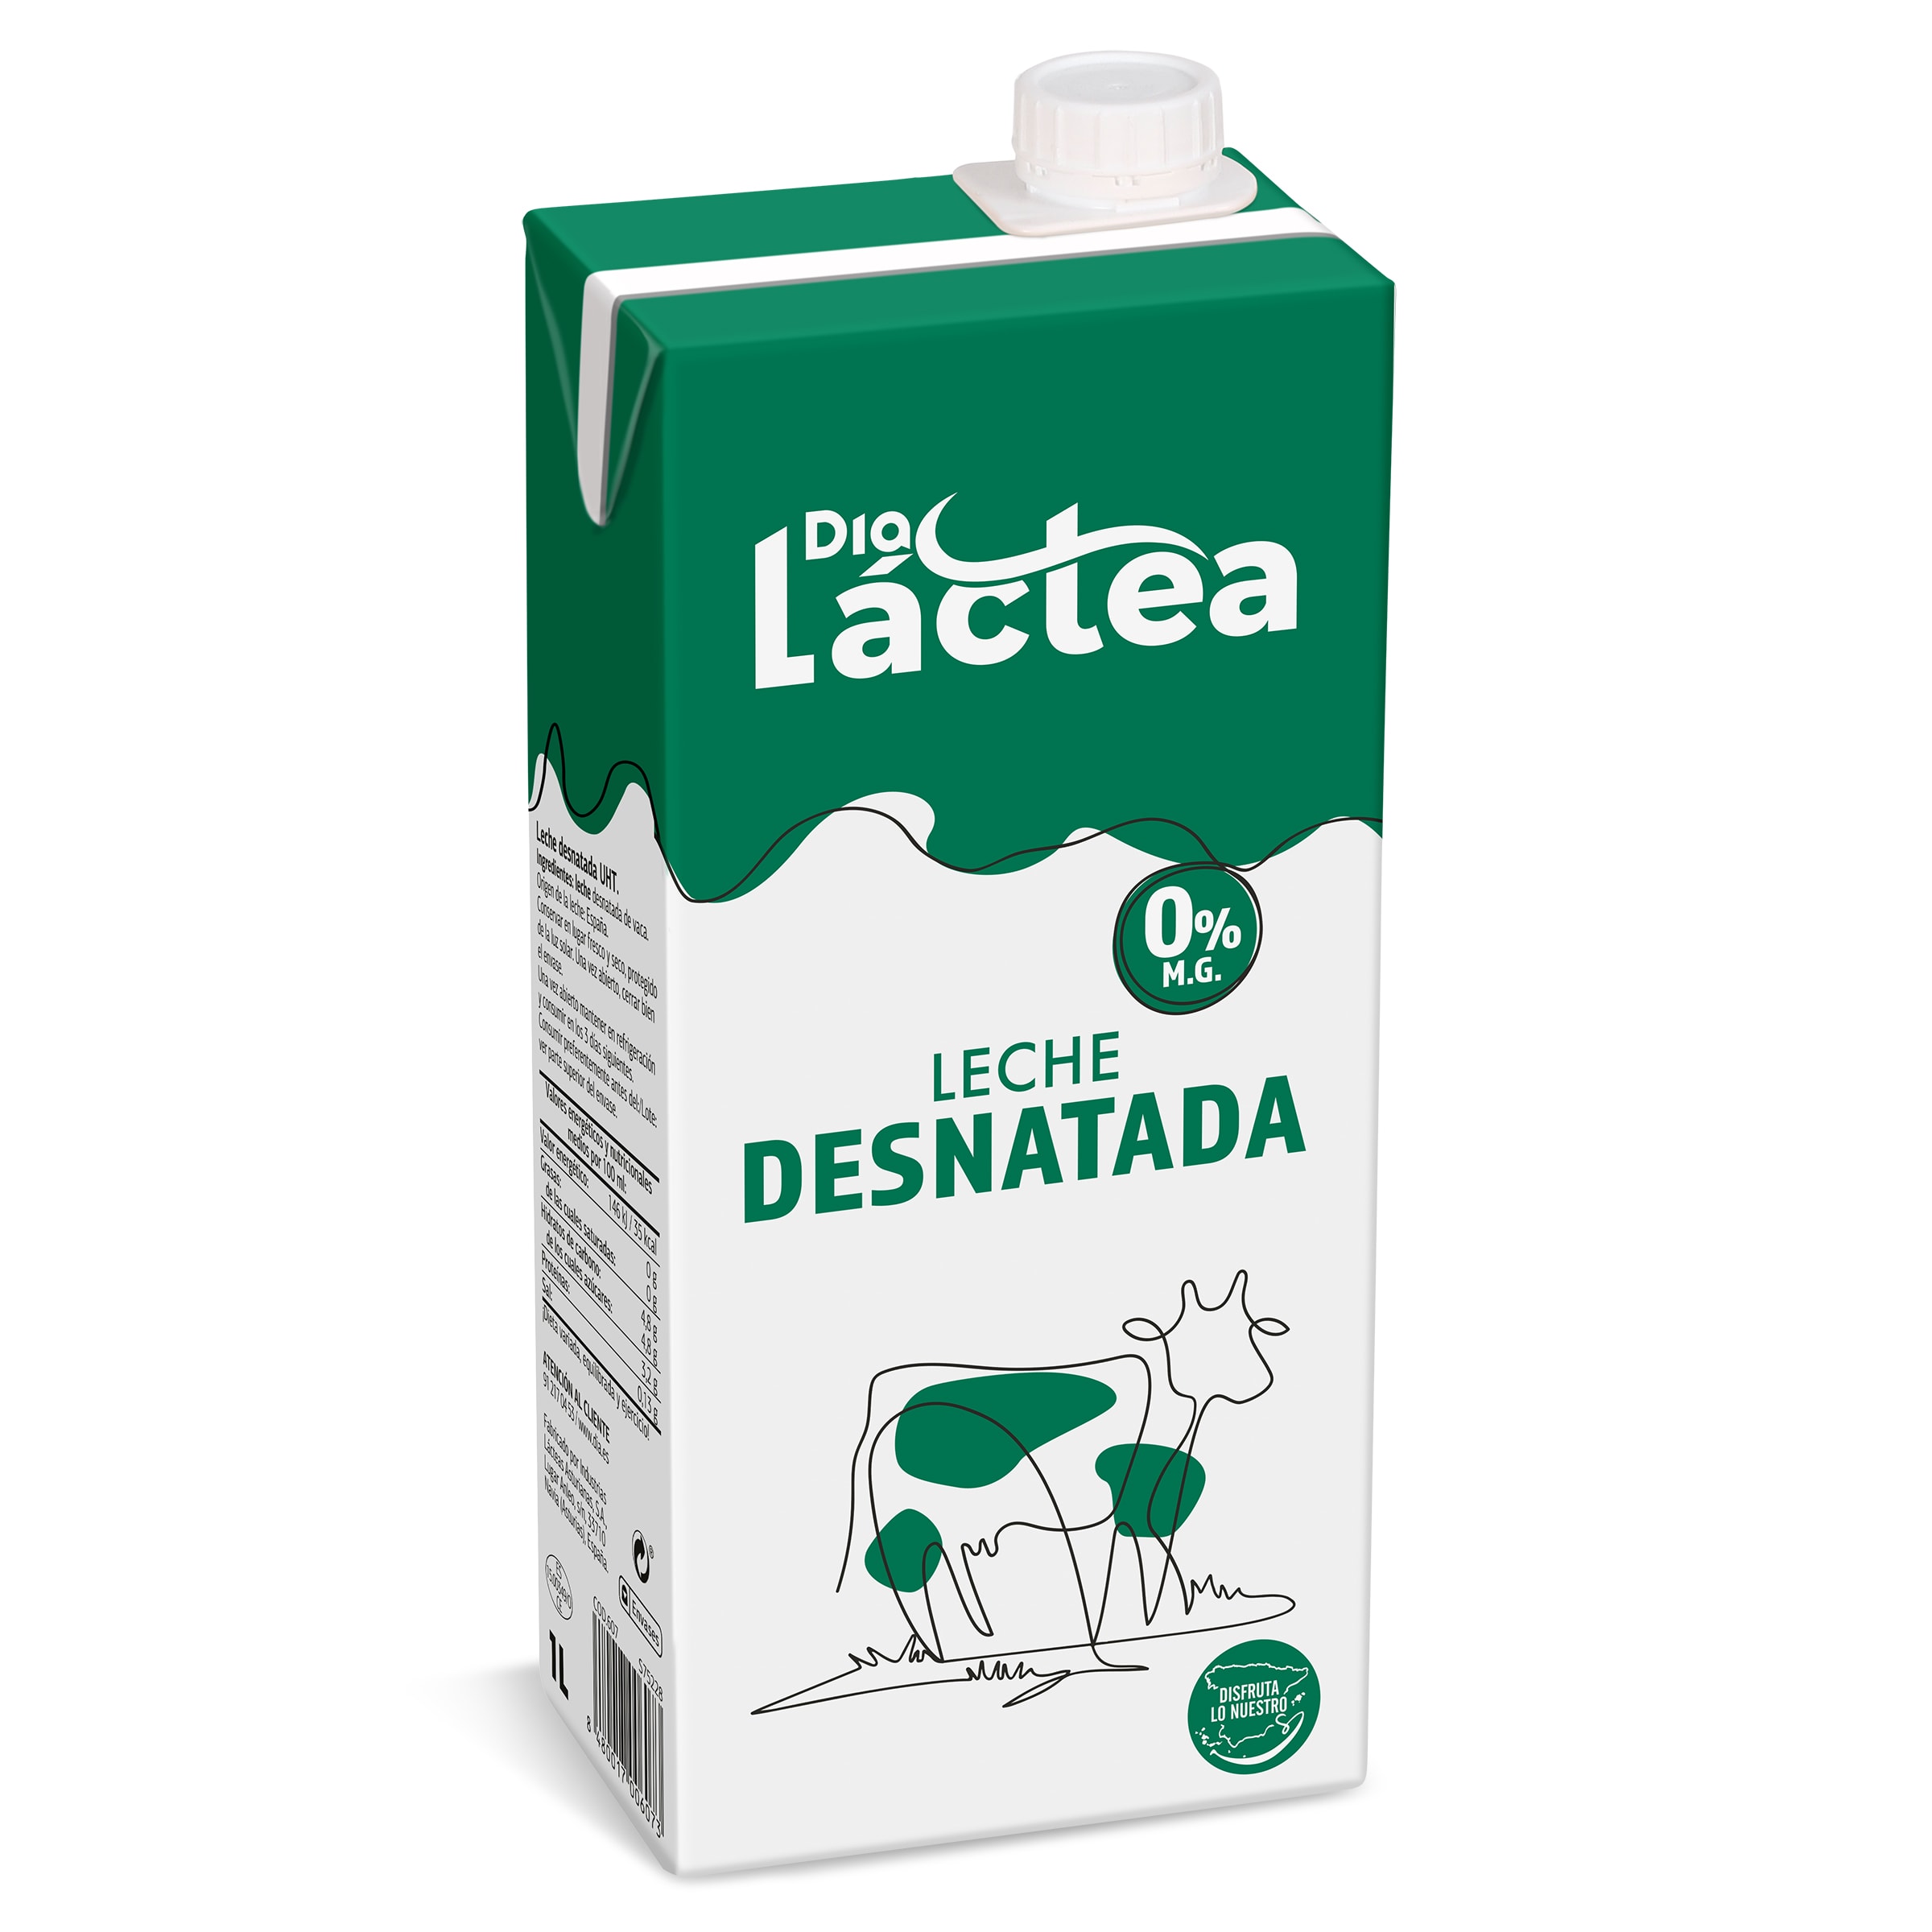 Comprar Leche condensada la lechera 74 en Supermercados MAS Online